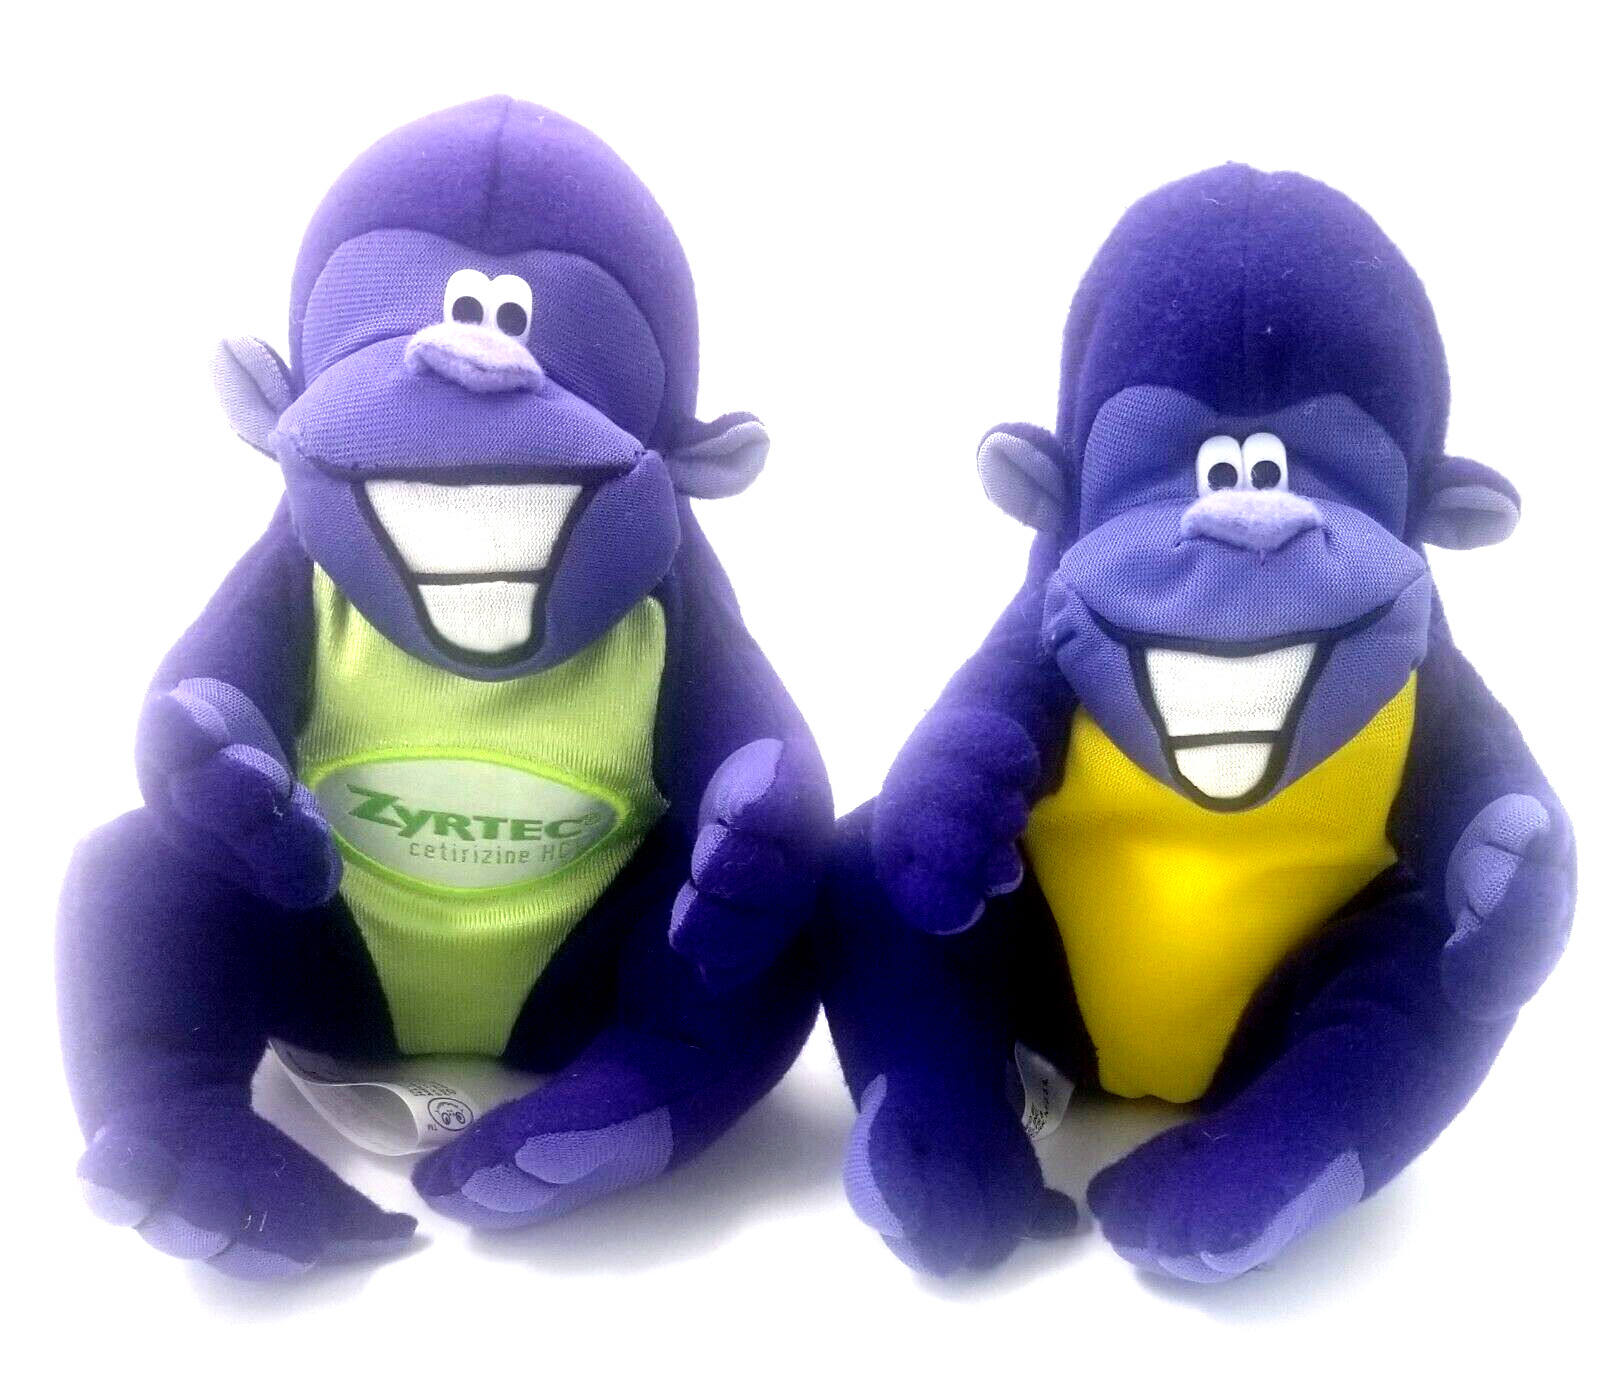 Zyrtec Purple Gorilla Monkey Vintage Advertising Pharma Promo Lot of 2